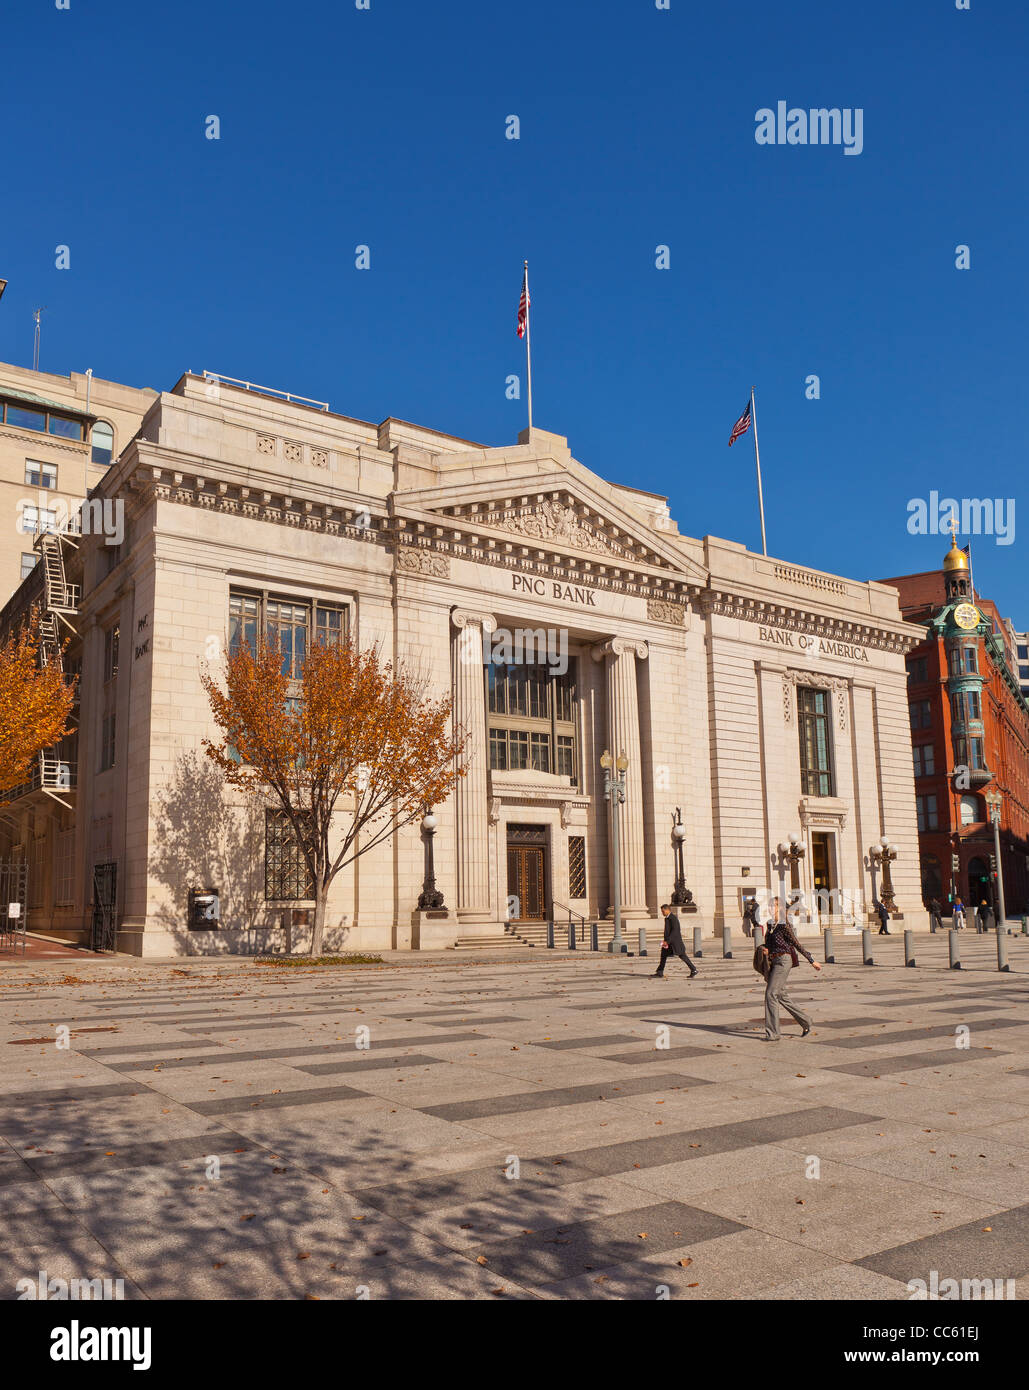 WASHINGTON, DC USA - PNC Bank Bank of America building and pedestrian area of Pennsylvania Avenue next to White House. Stock Photo